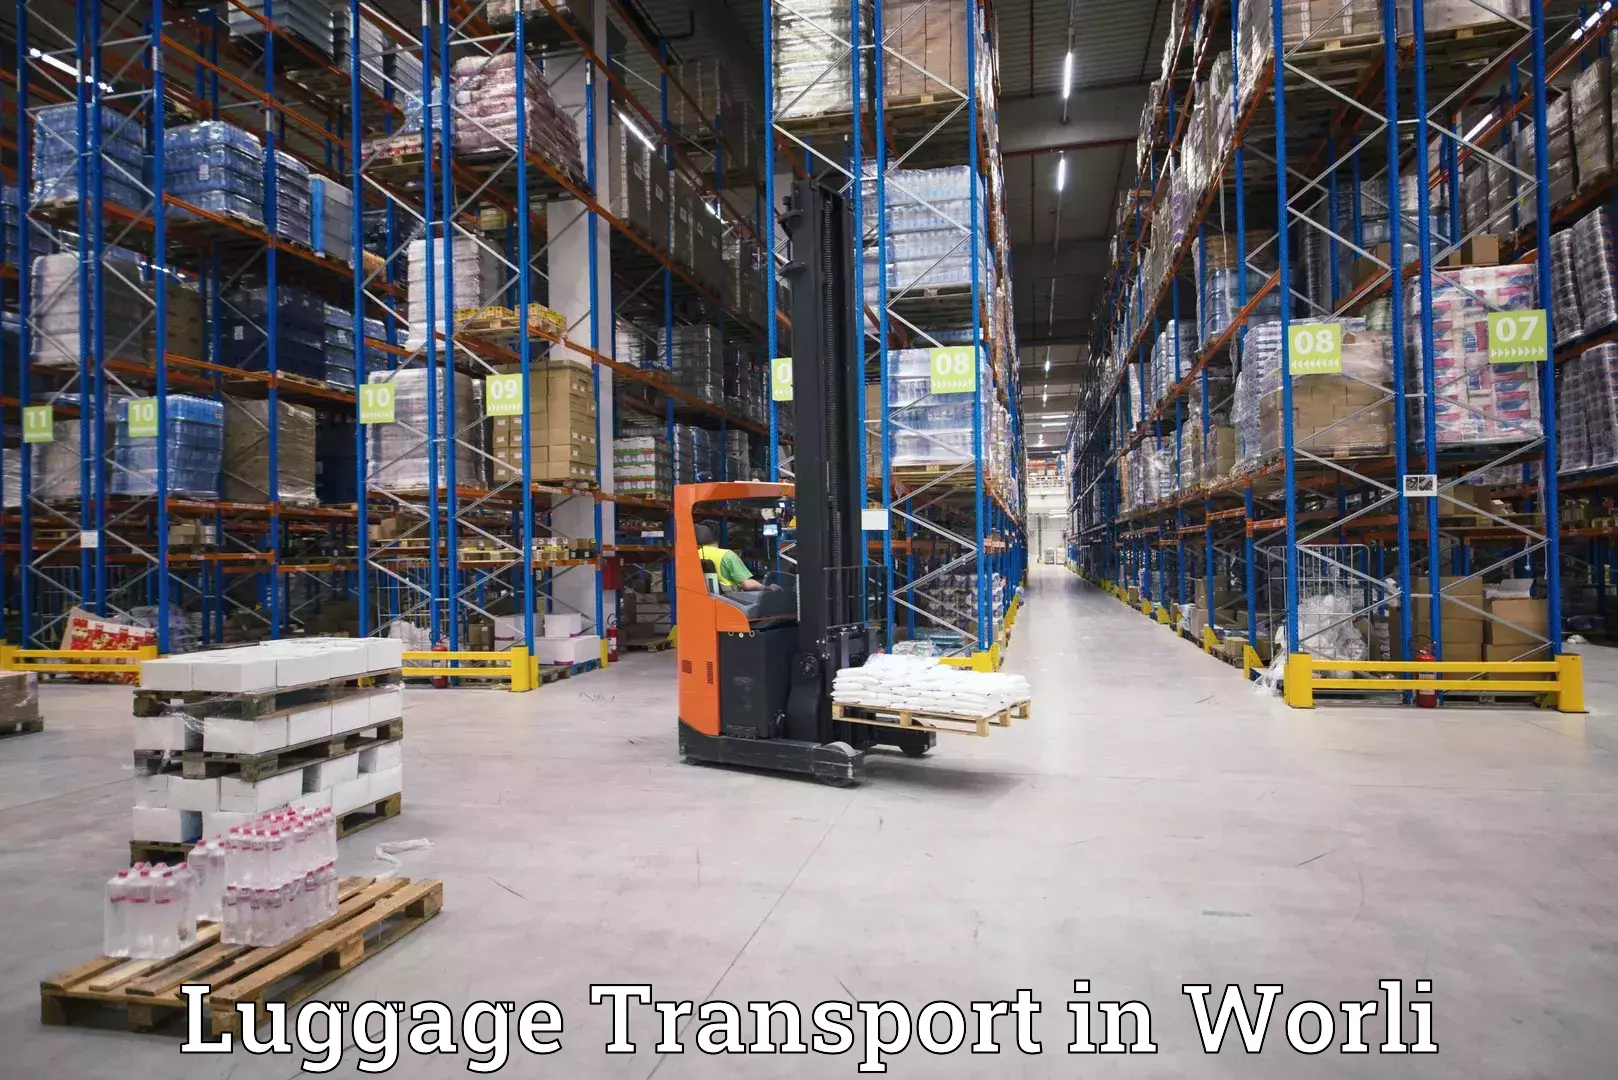 Luggage transport service in Worli